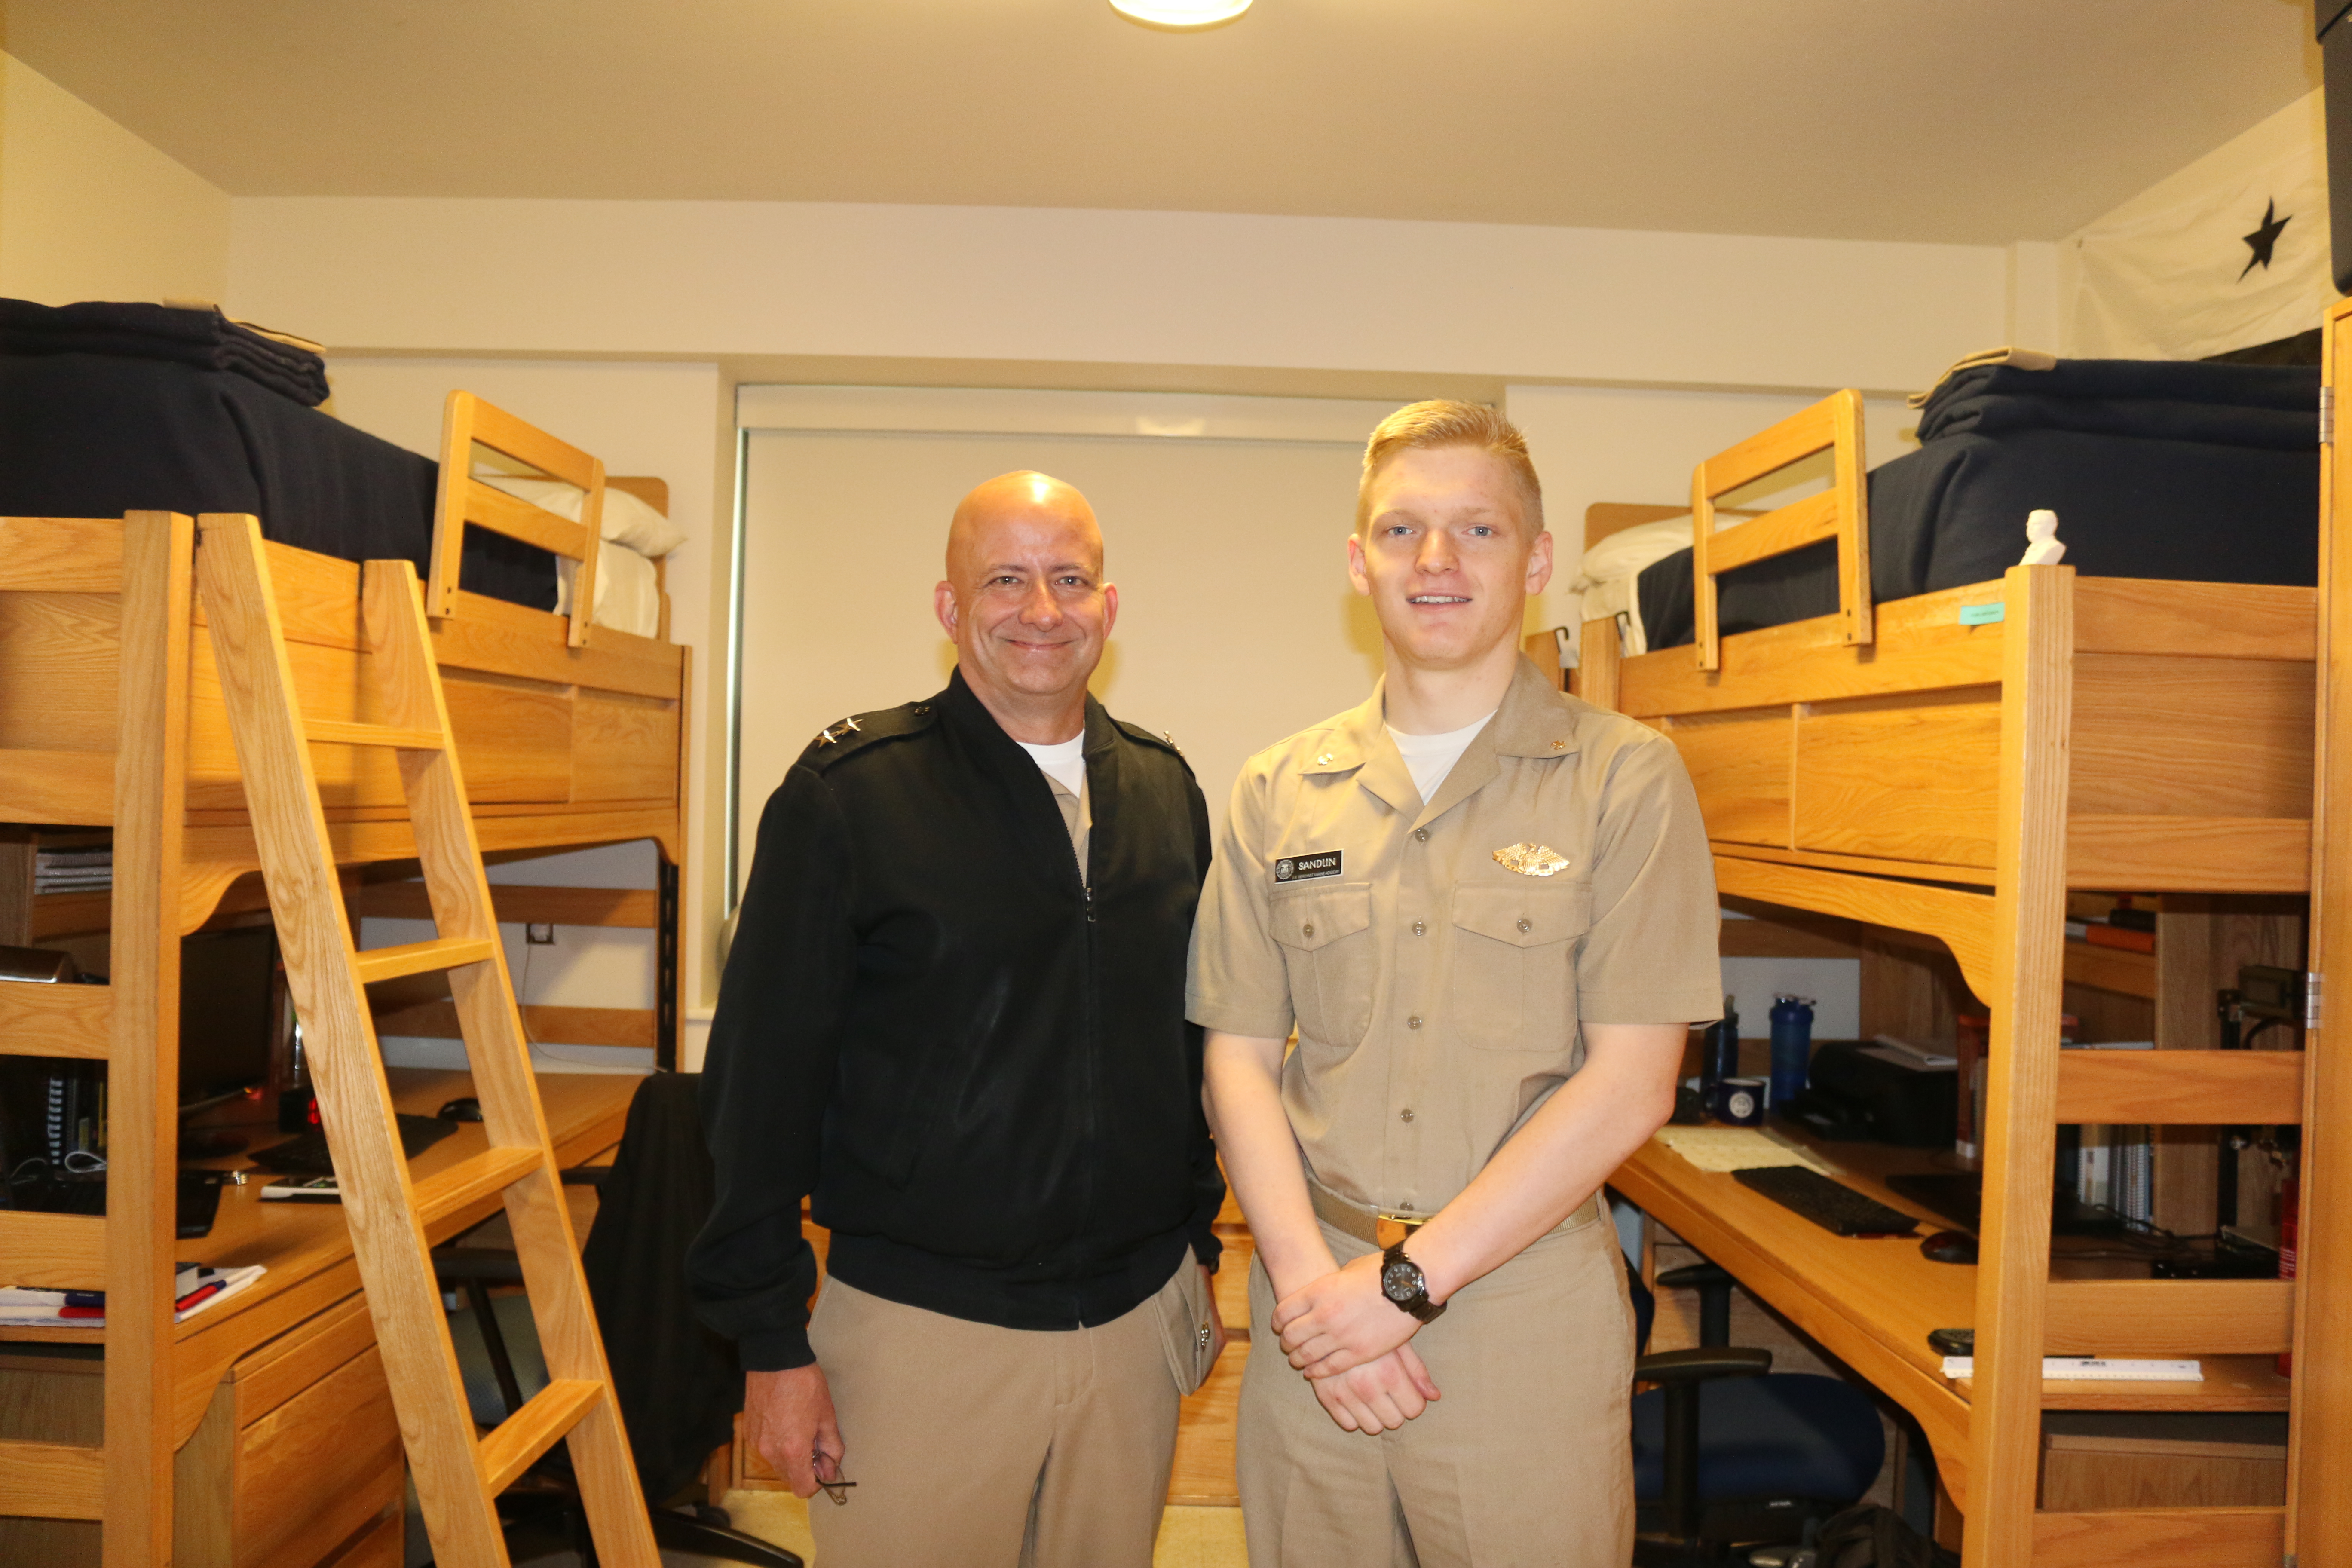 RADM Sharp takes time to meet with midshipmen